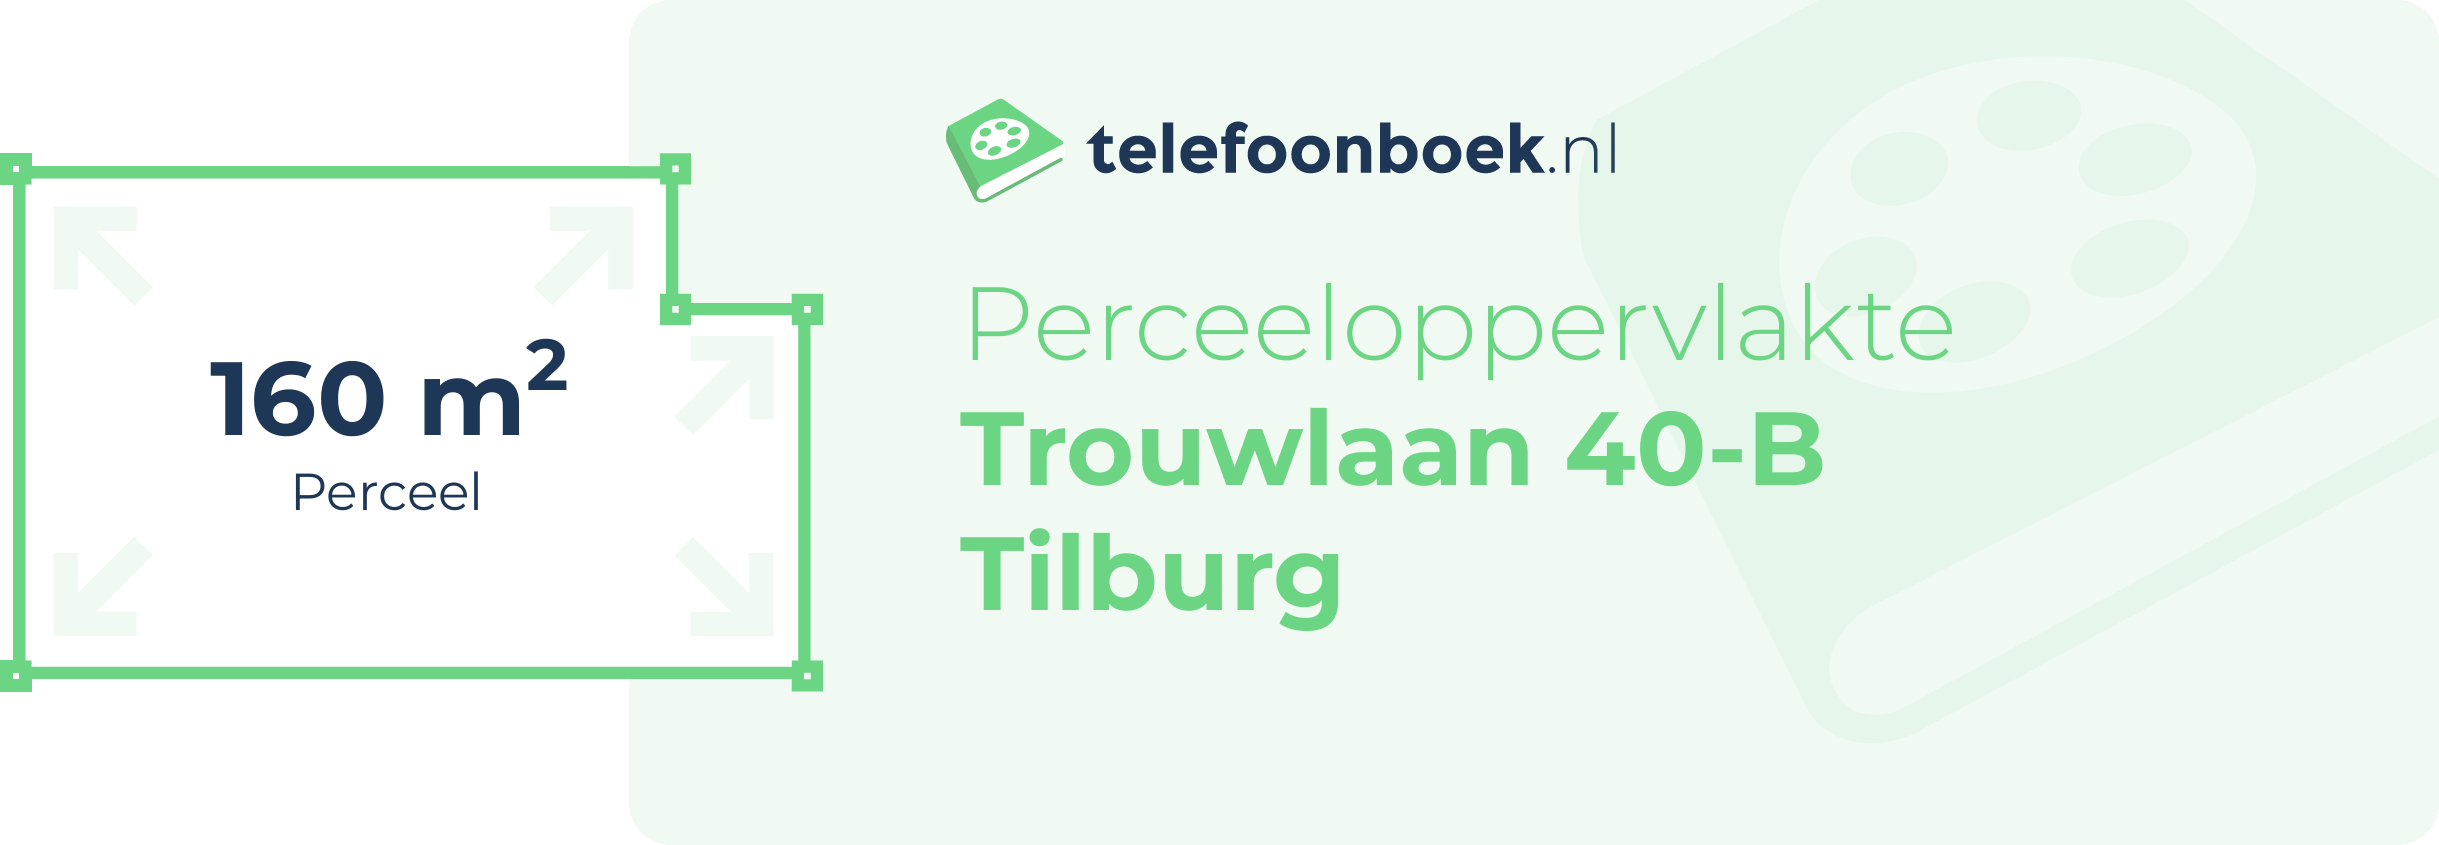 Perceeloppervlakte Trouwlaan 40-B Tilburg